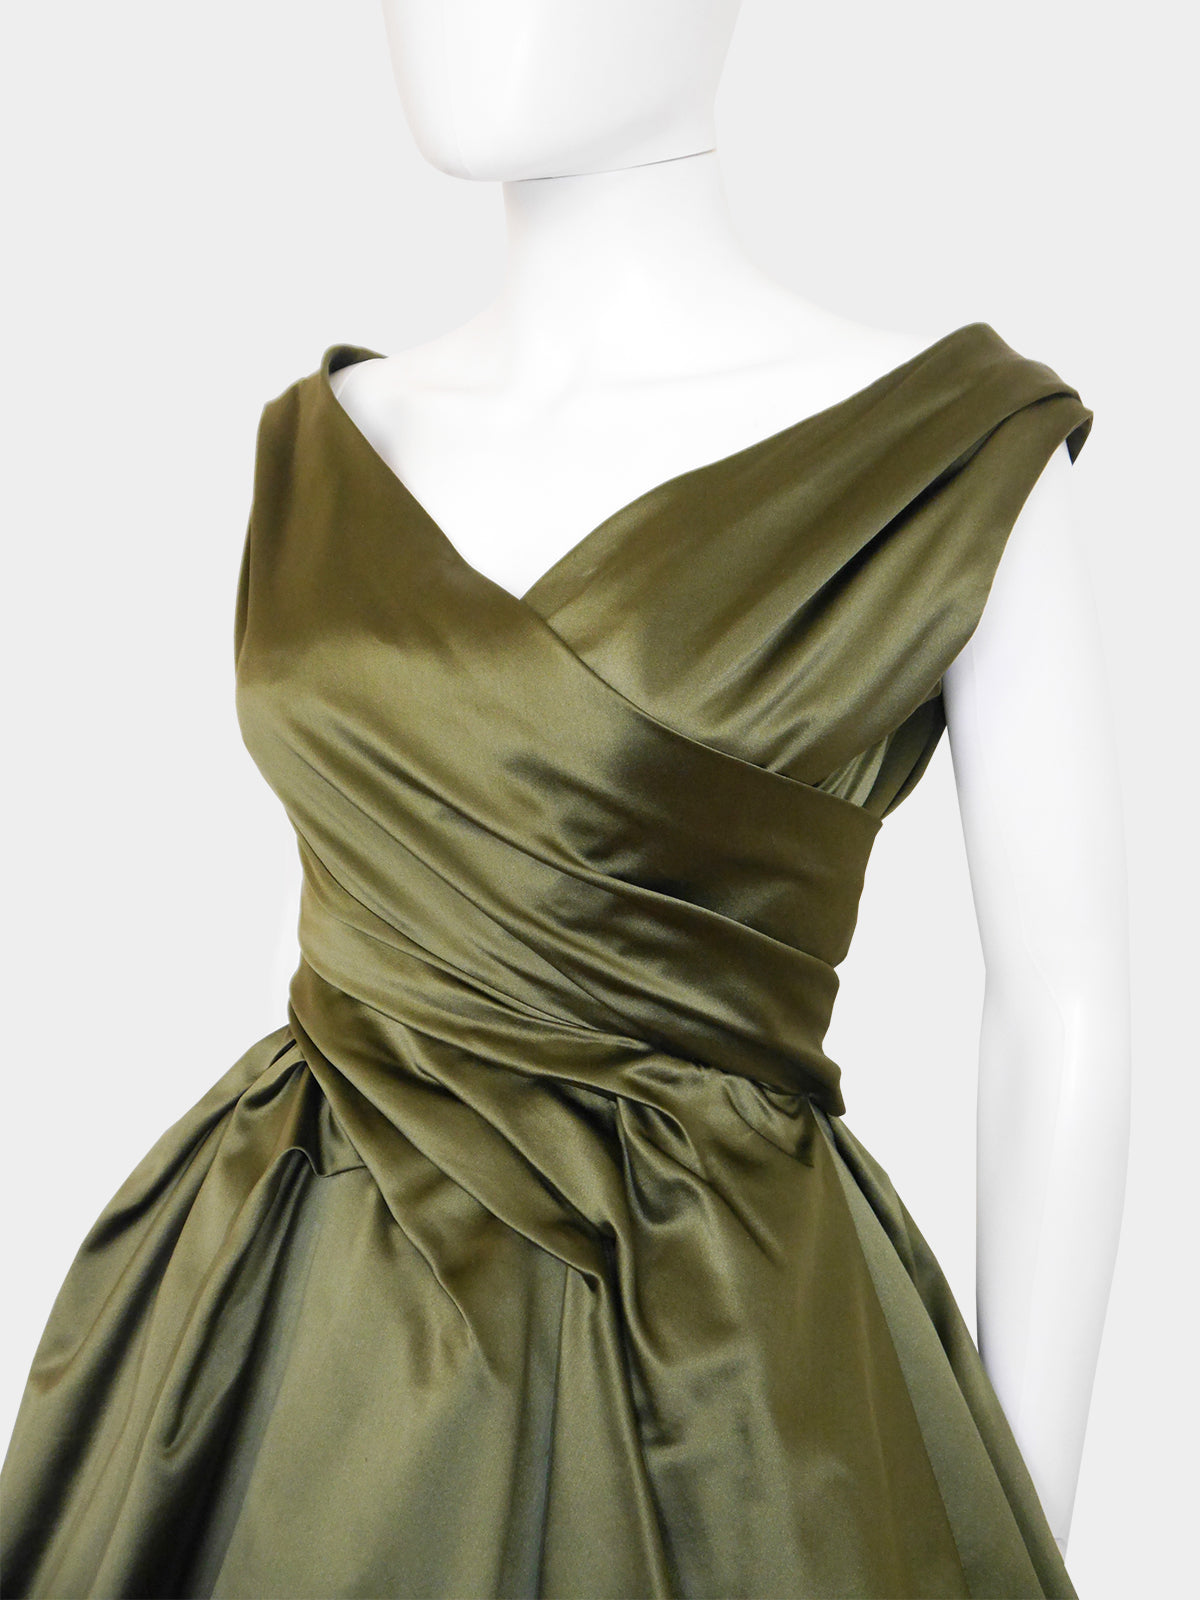 CHRISTIAN DIOR Fall 1957 Haute Couture "Venezuela" Draped Silk Evening Dress Size XXS-XS